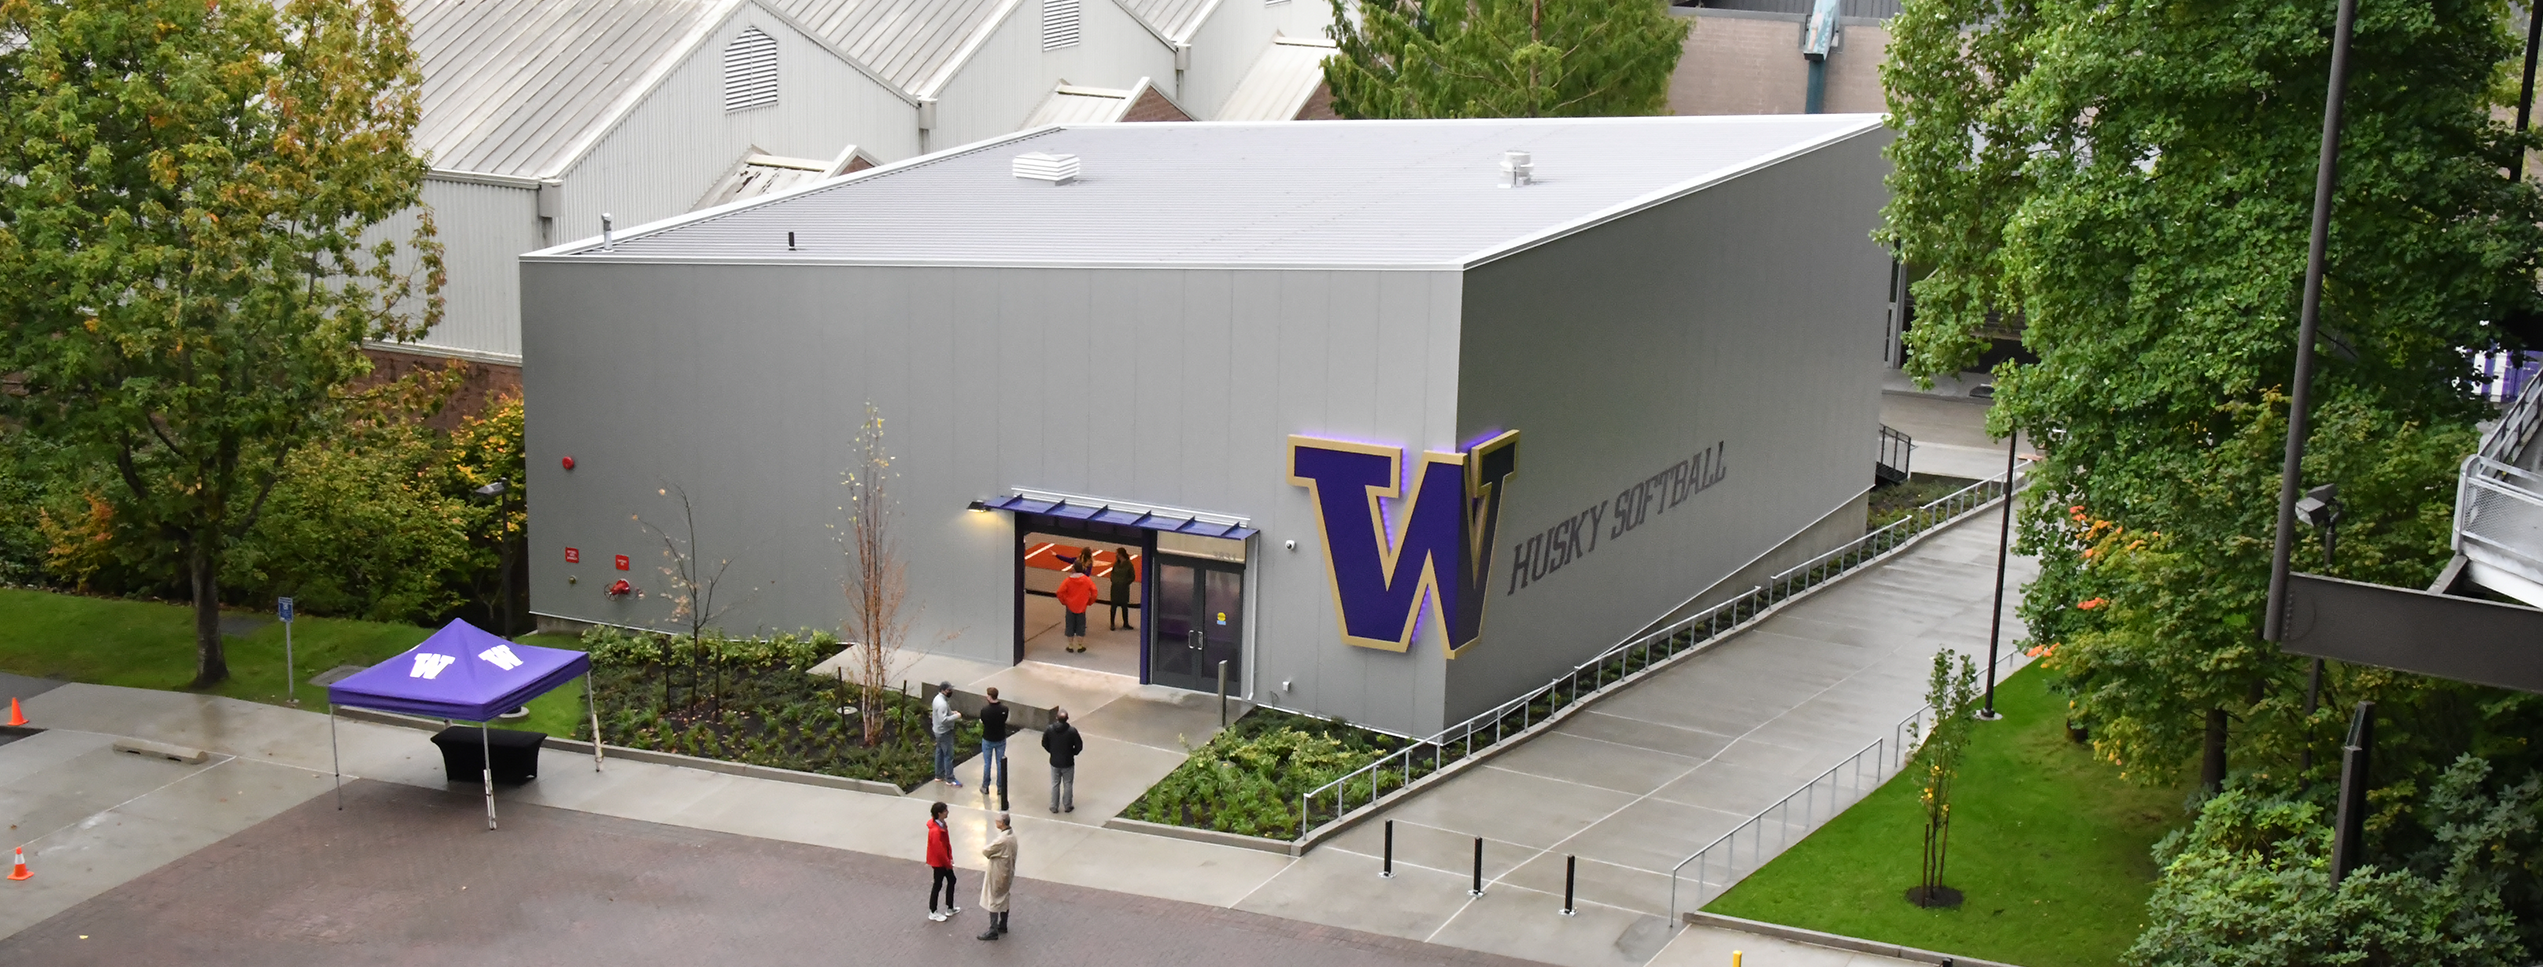 University of Washington Softball Performance Center